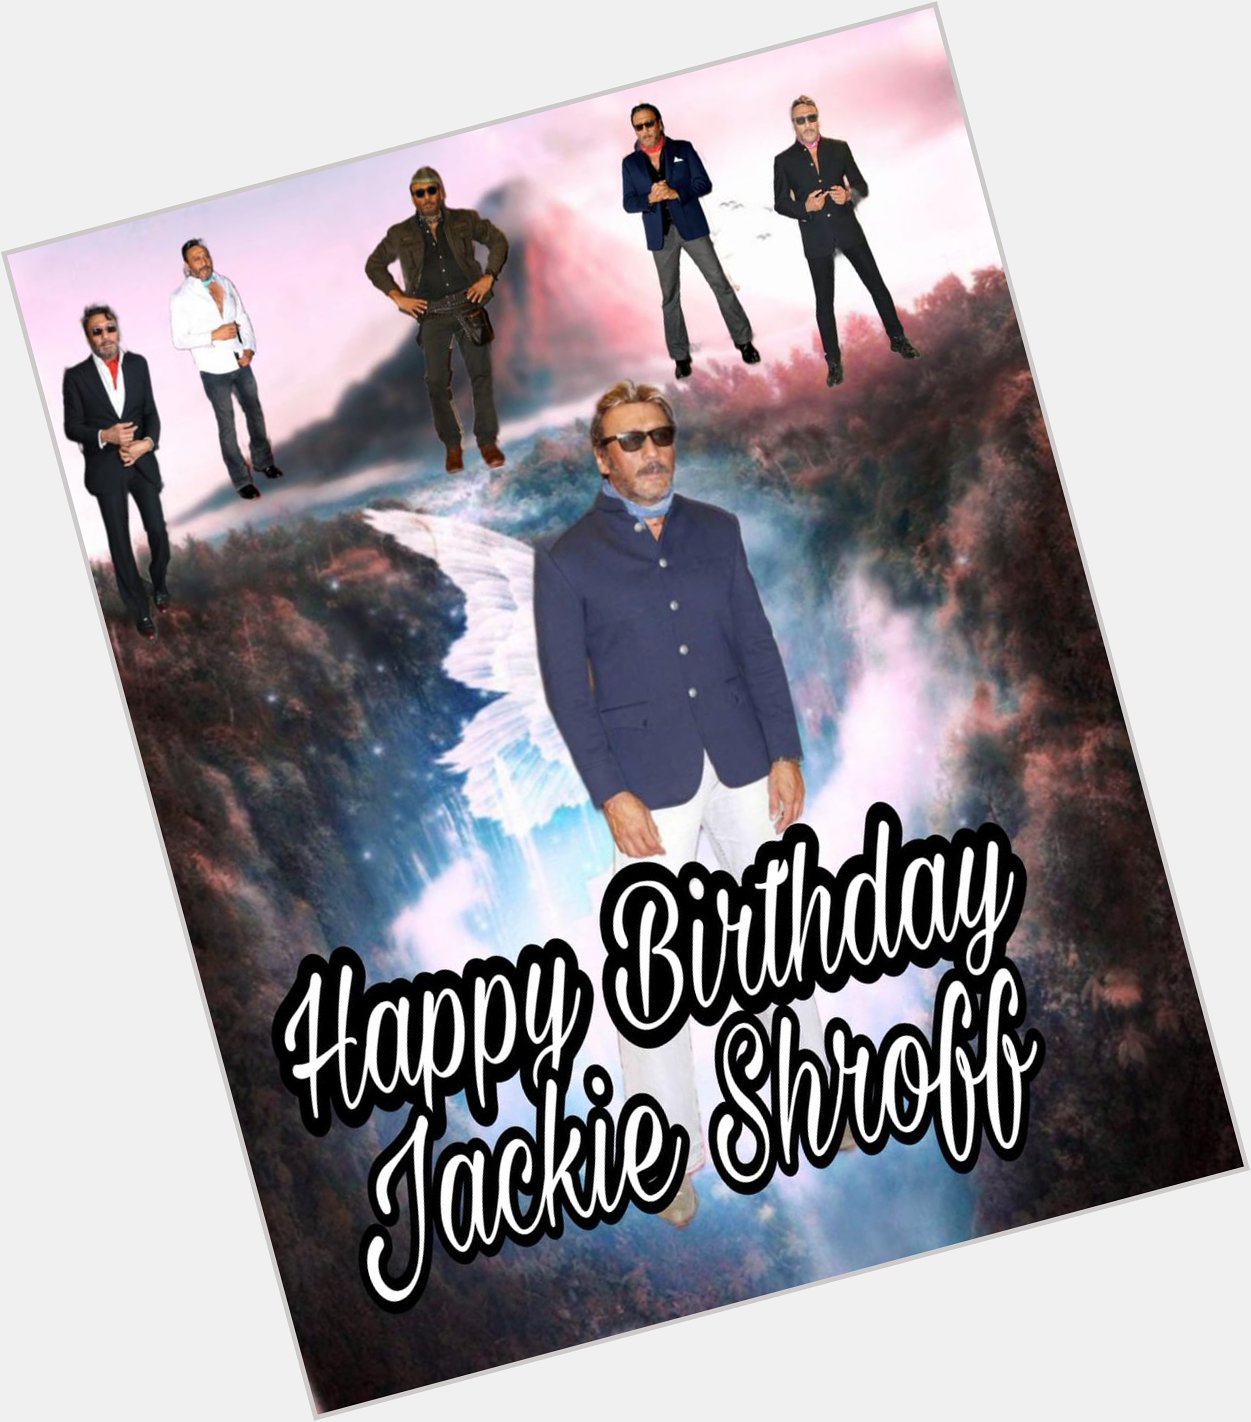 Happy Birthday
Jackie Shroff    